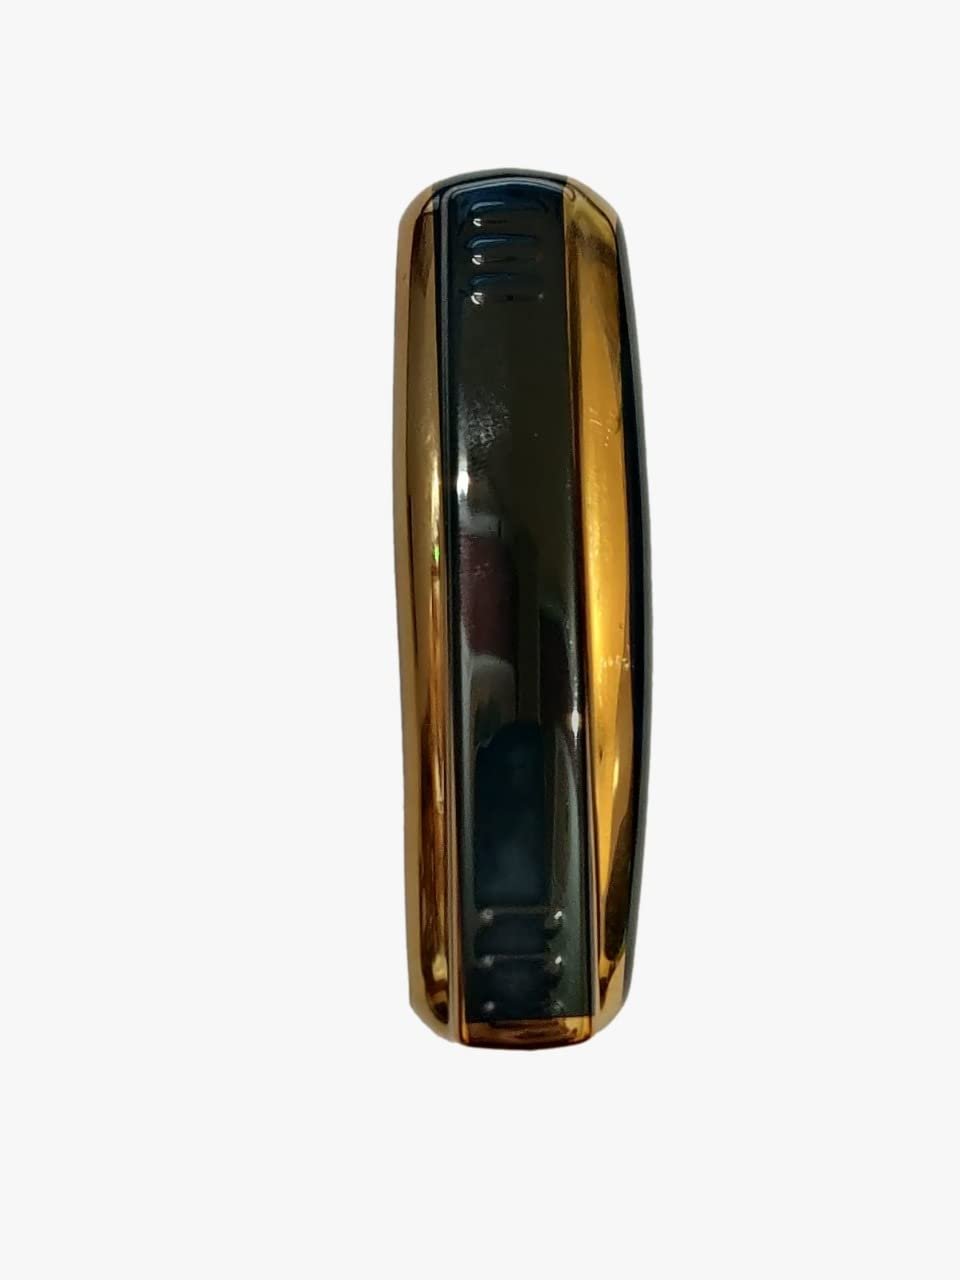 Crystal TPU Carbon Fiber Style 3 Button Remote Push Start Smart Key Cover for Creta, Grand i10, i20 Elite, i10 Nios, i20 Active, Verna,Aura (Gold/Black) Image 